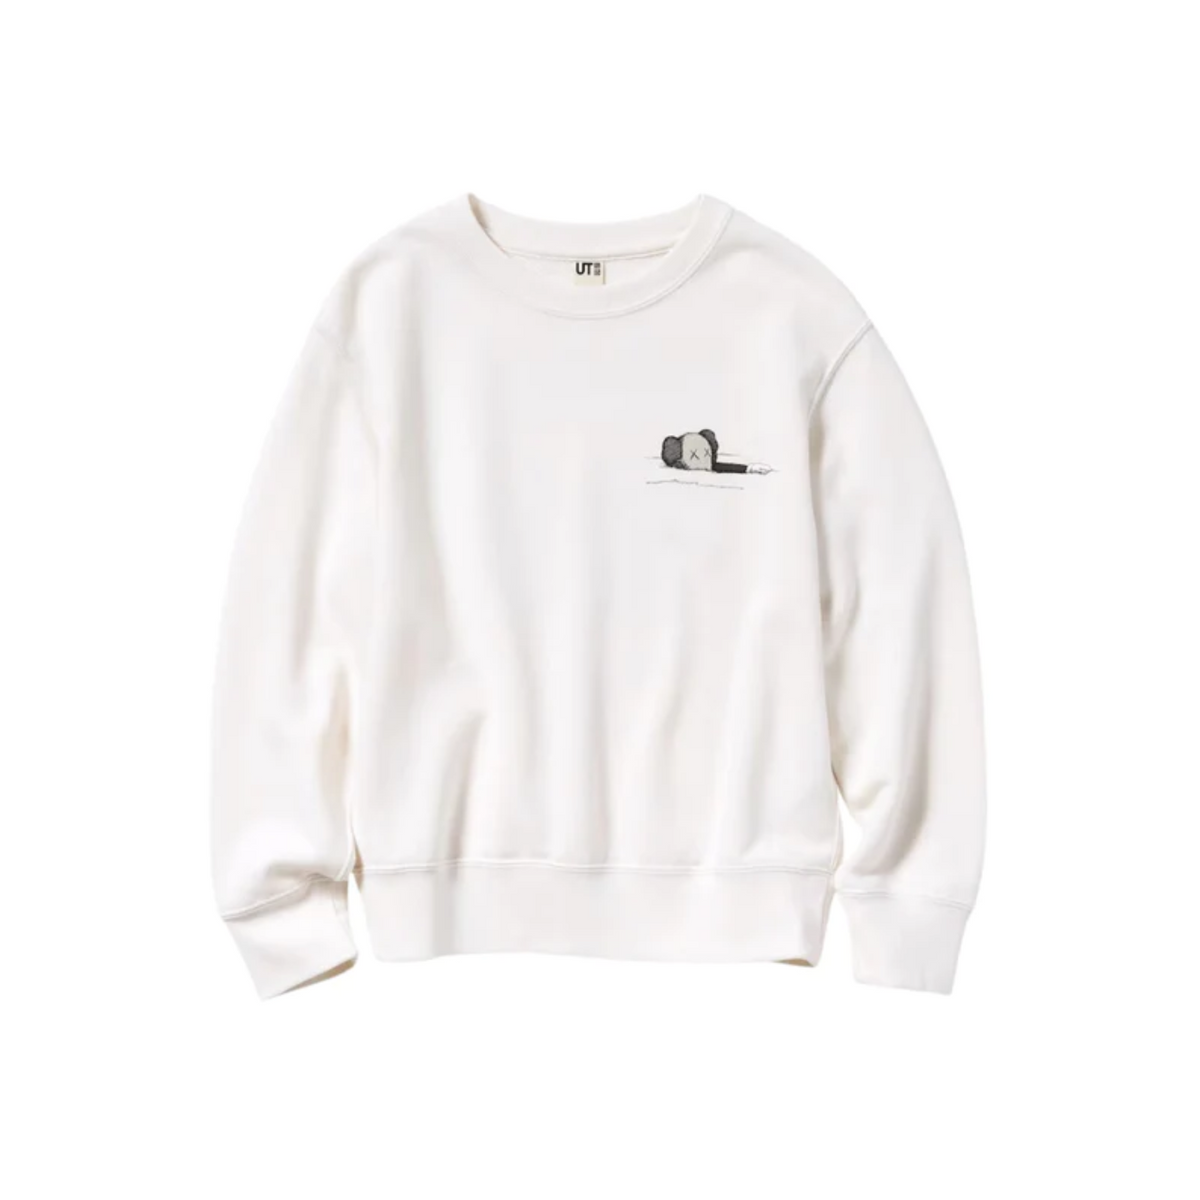 KAWS x Uniqlo Longsleeve Sweatshirt "Off White"